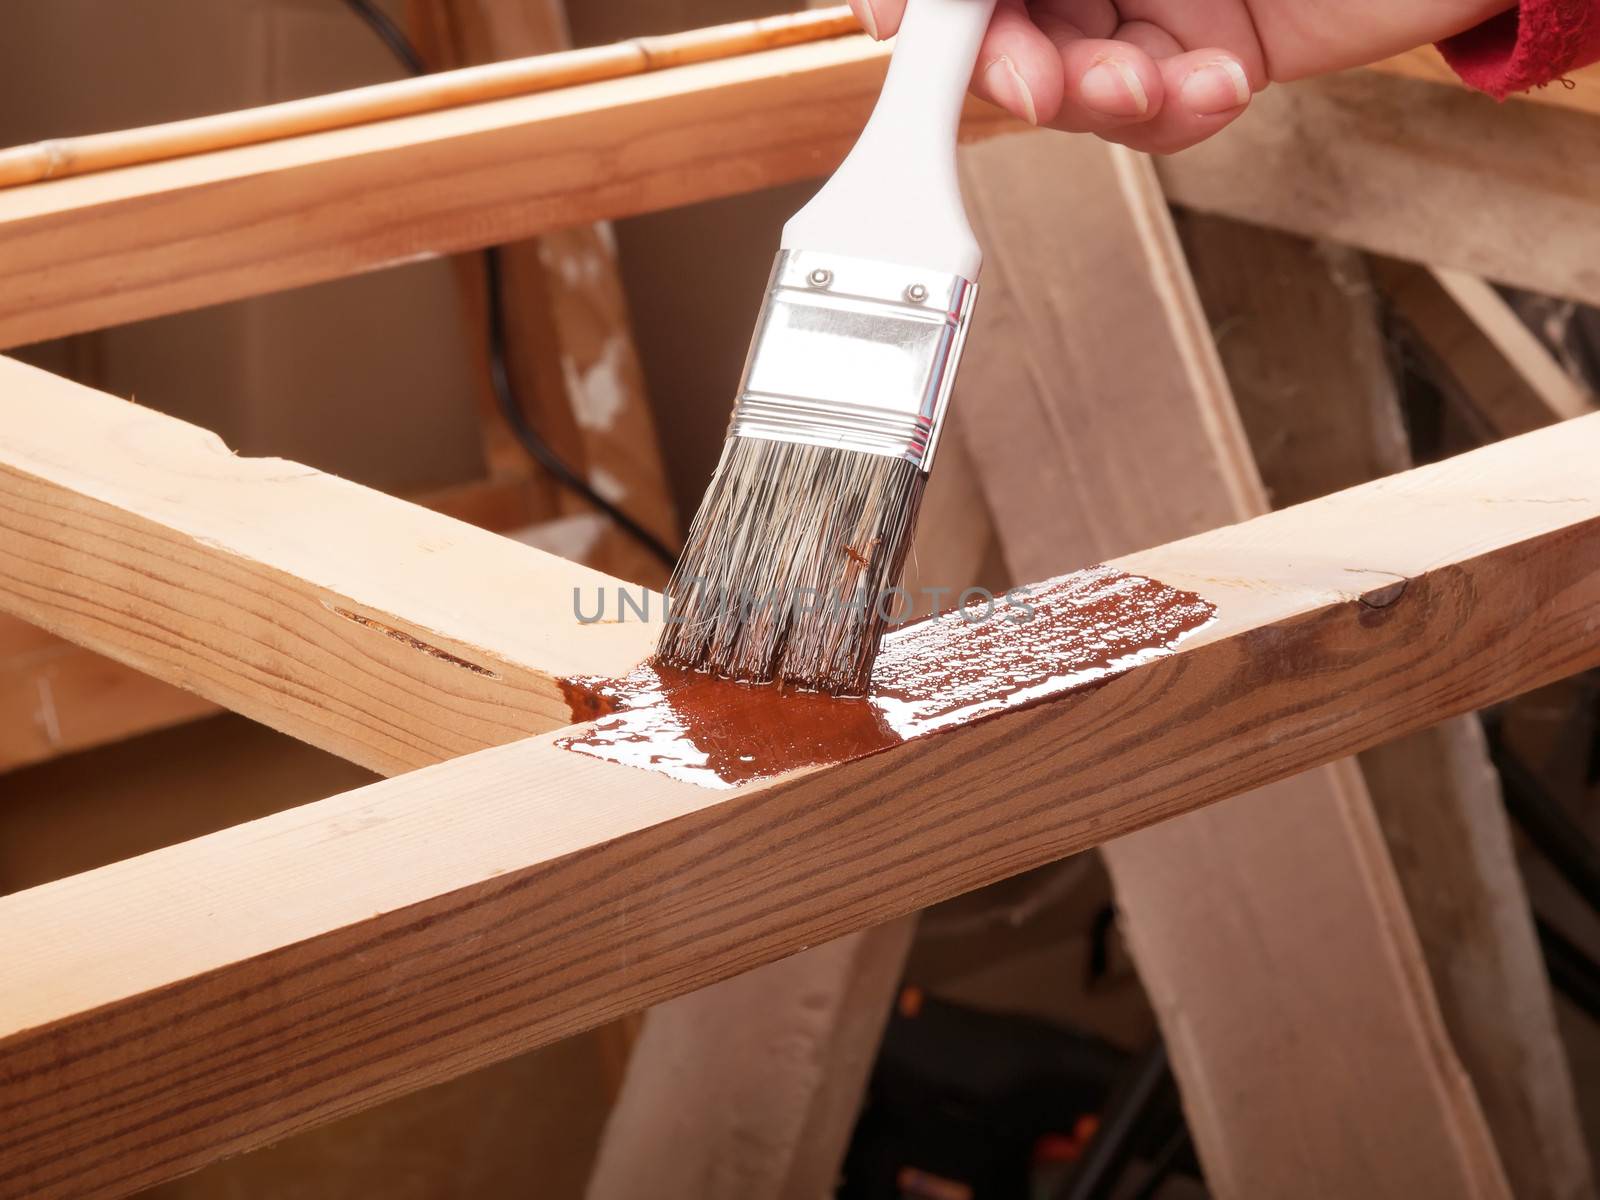 applying protective primer on wooden rack